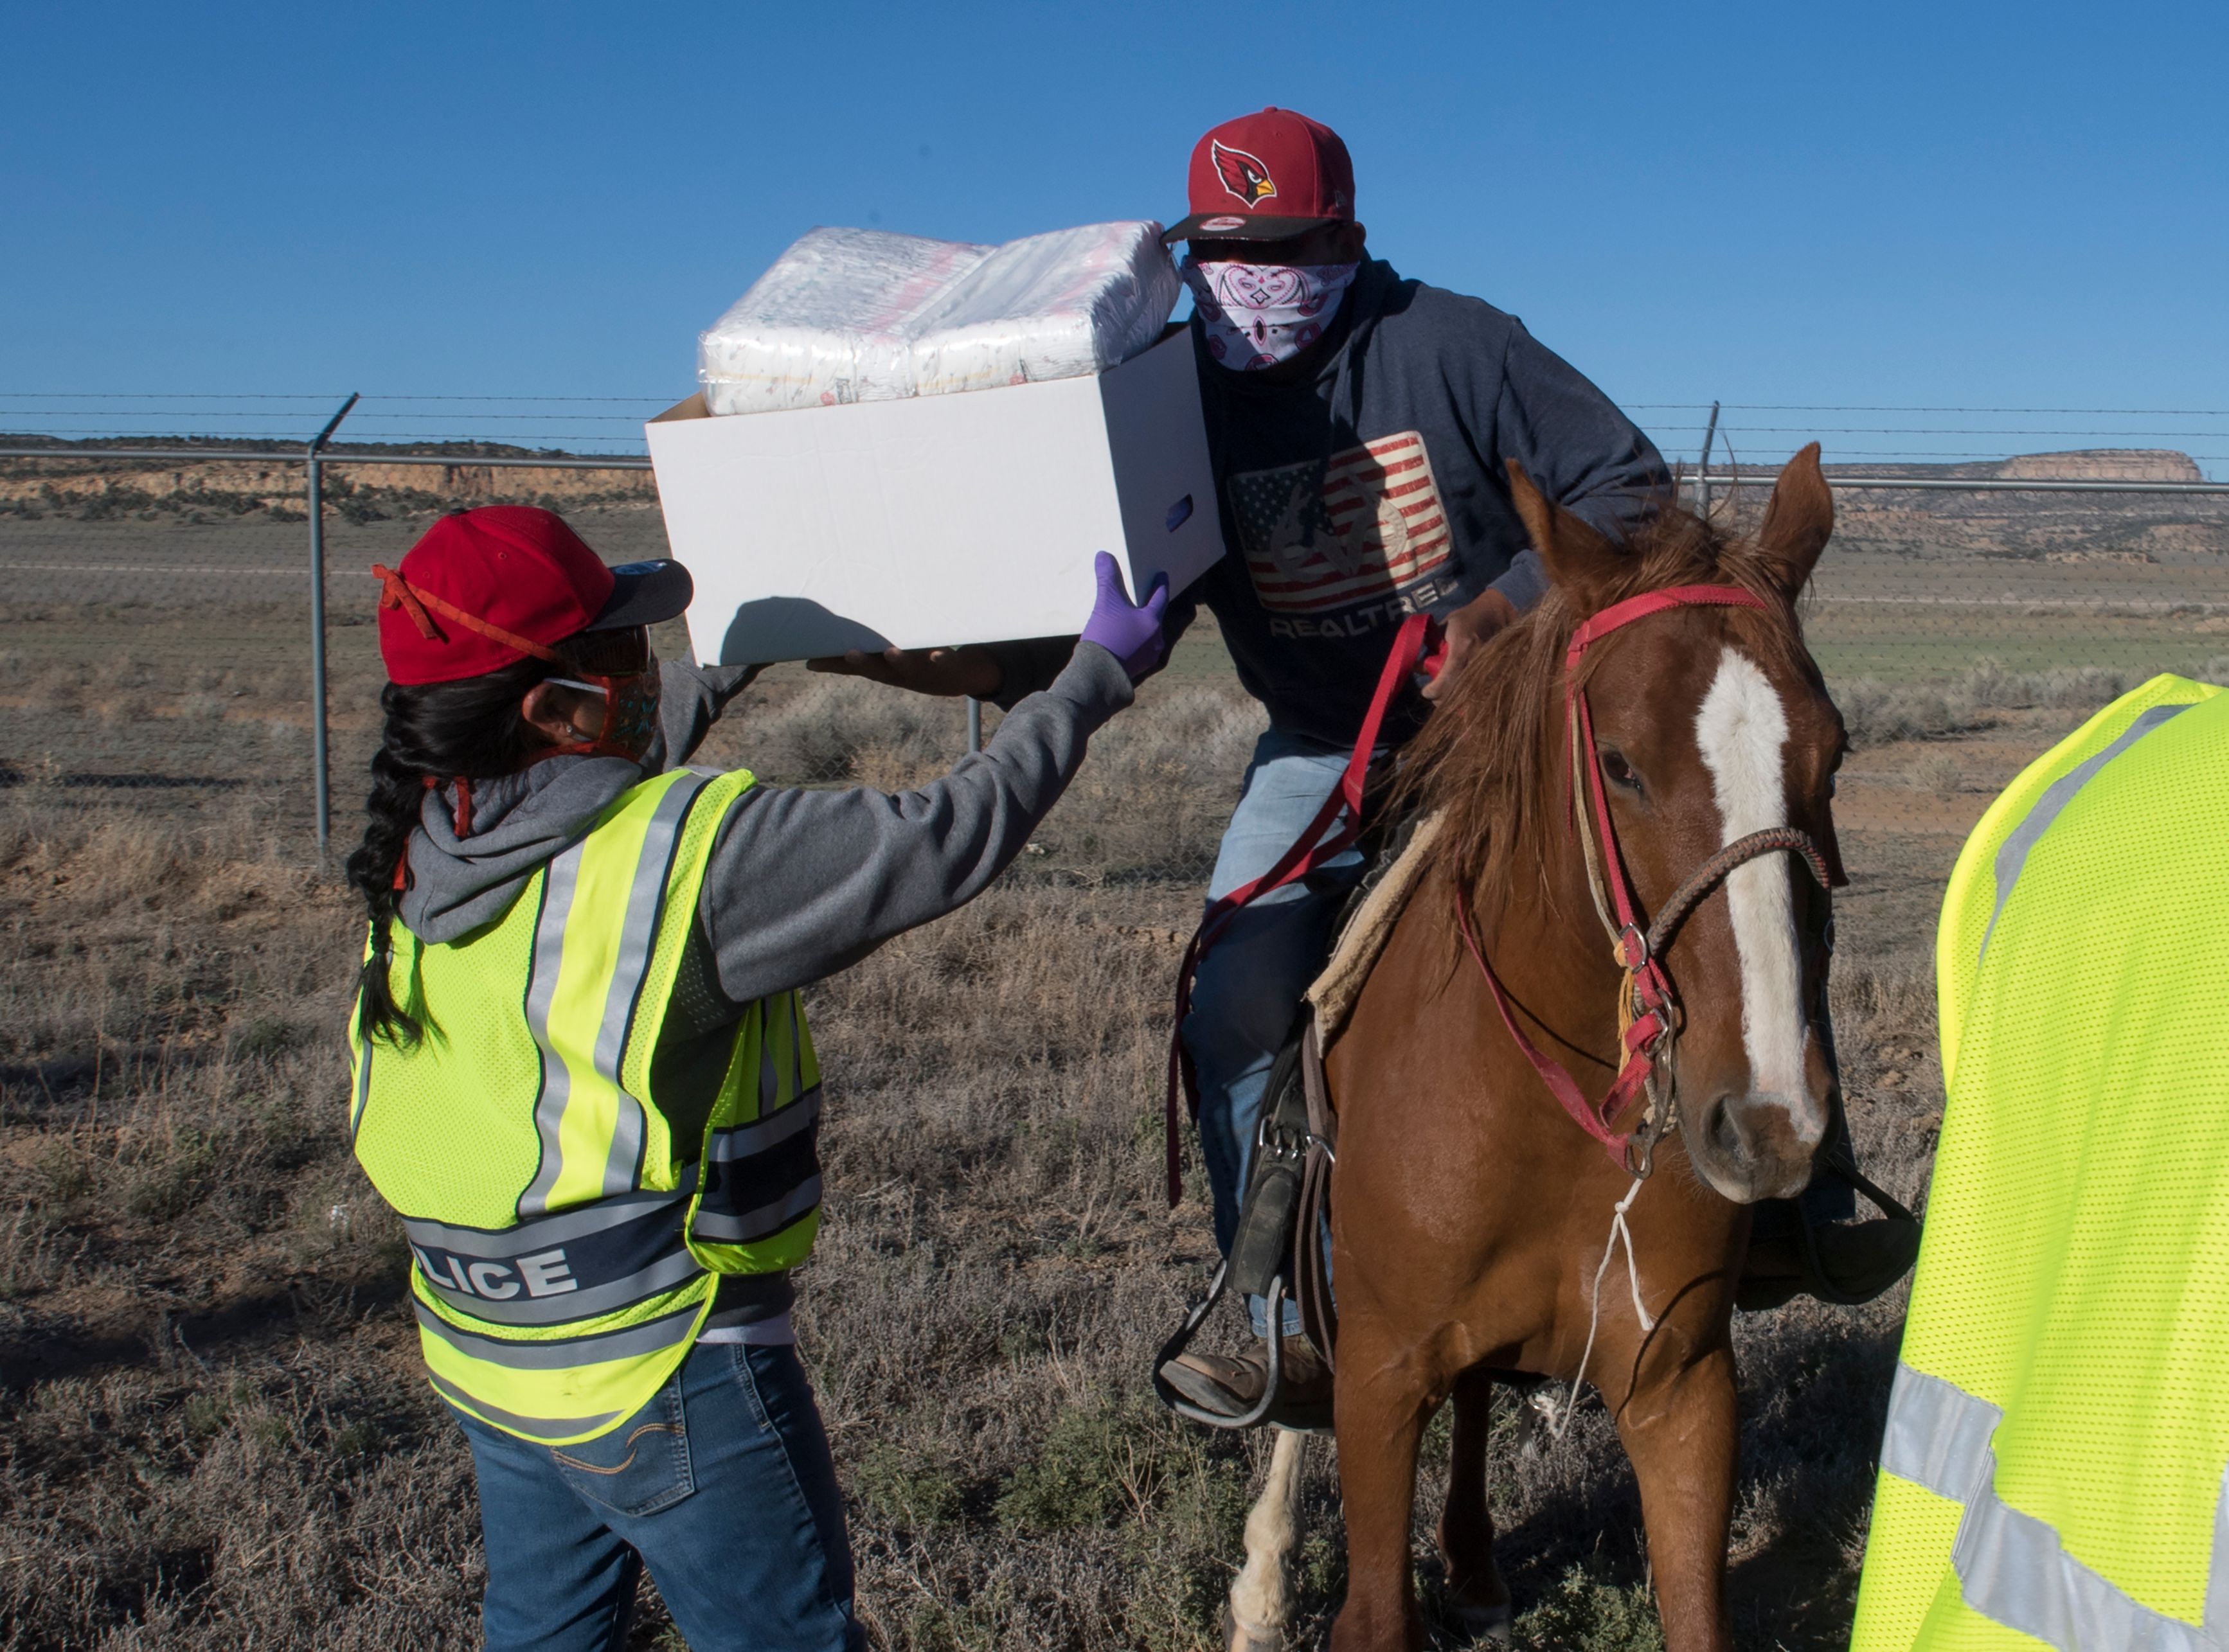 Native Americans of the Navajo Nation pick up supplies on horses at a food bank set up at the Navajo Nation town of Casamero Lake in New Mexico on May 20